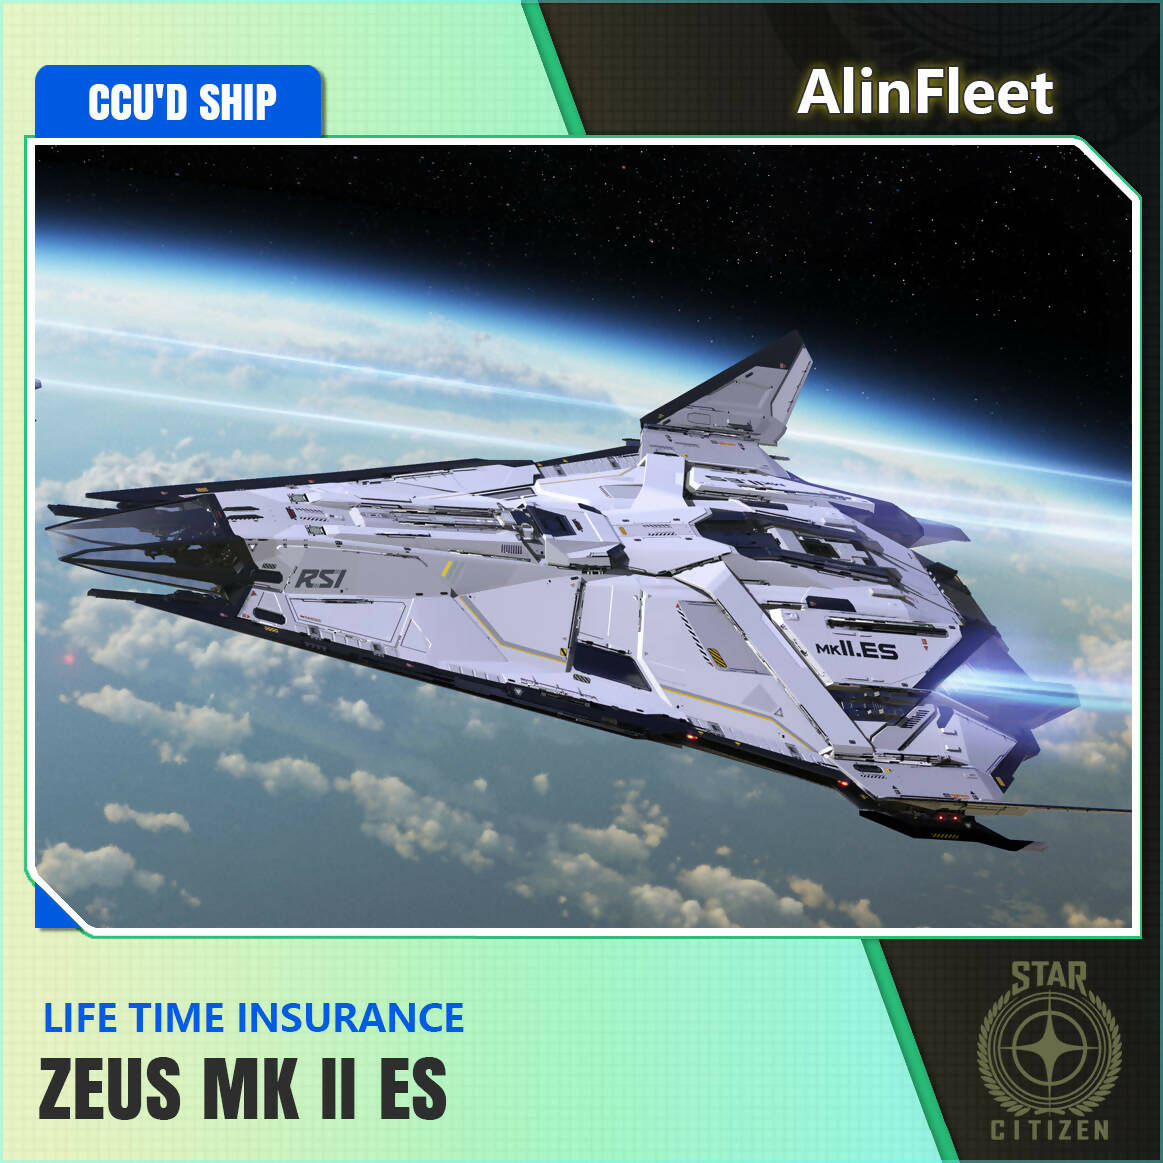 Zeus MK II ES - LTI Insurance - CCU'd Ship